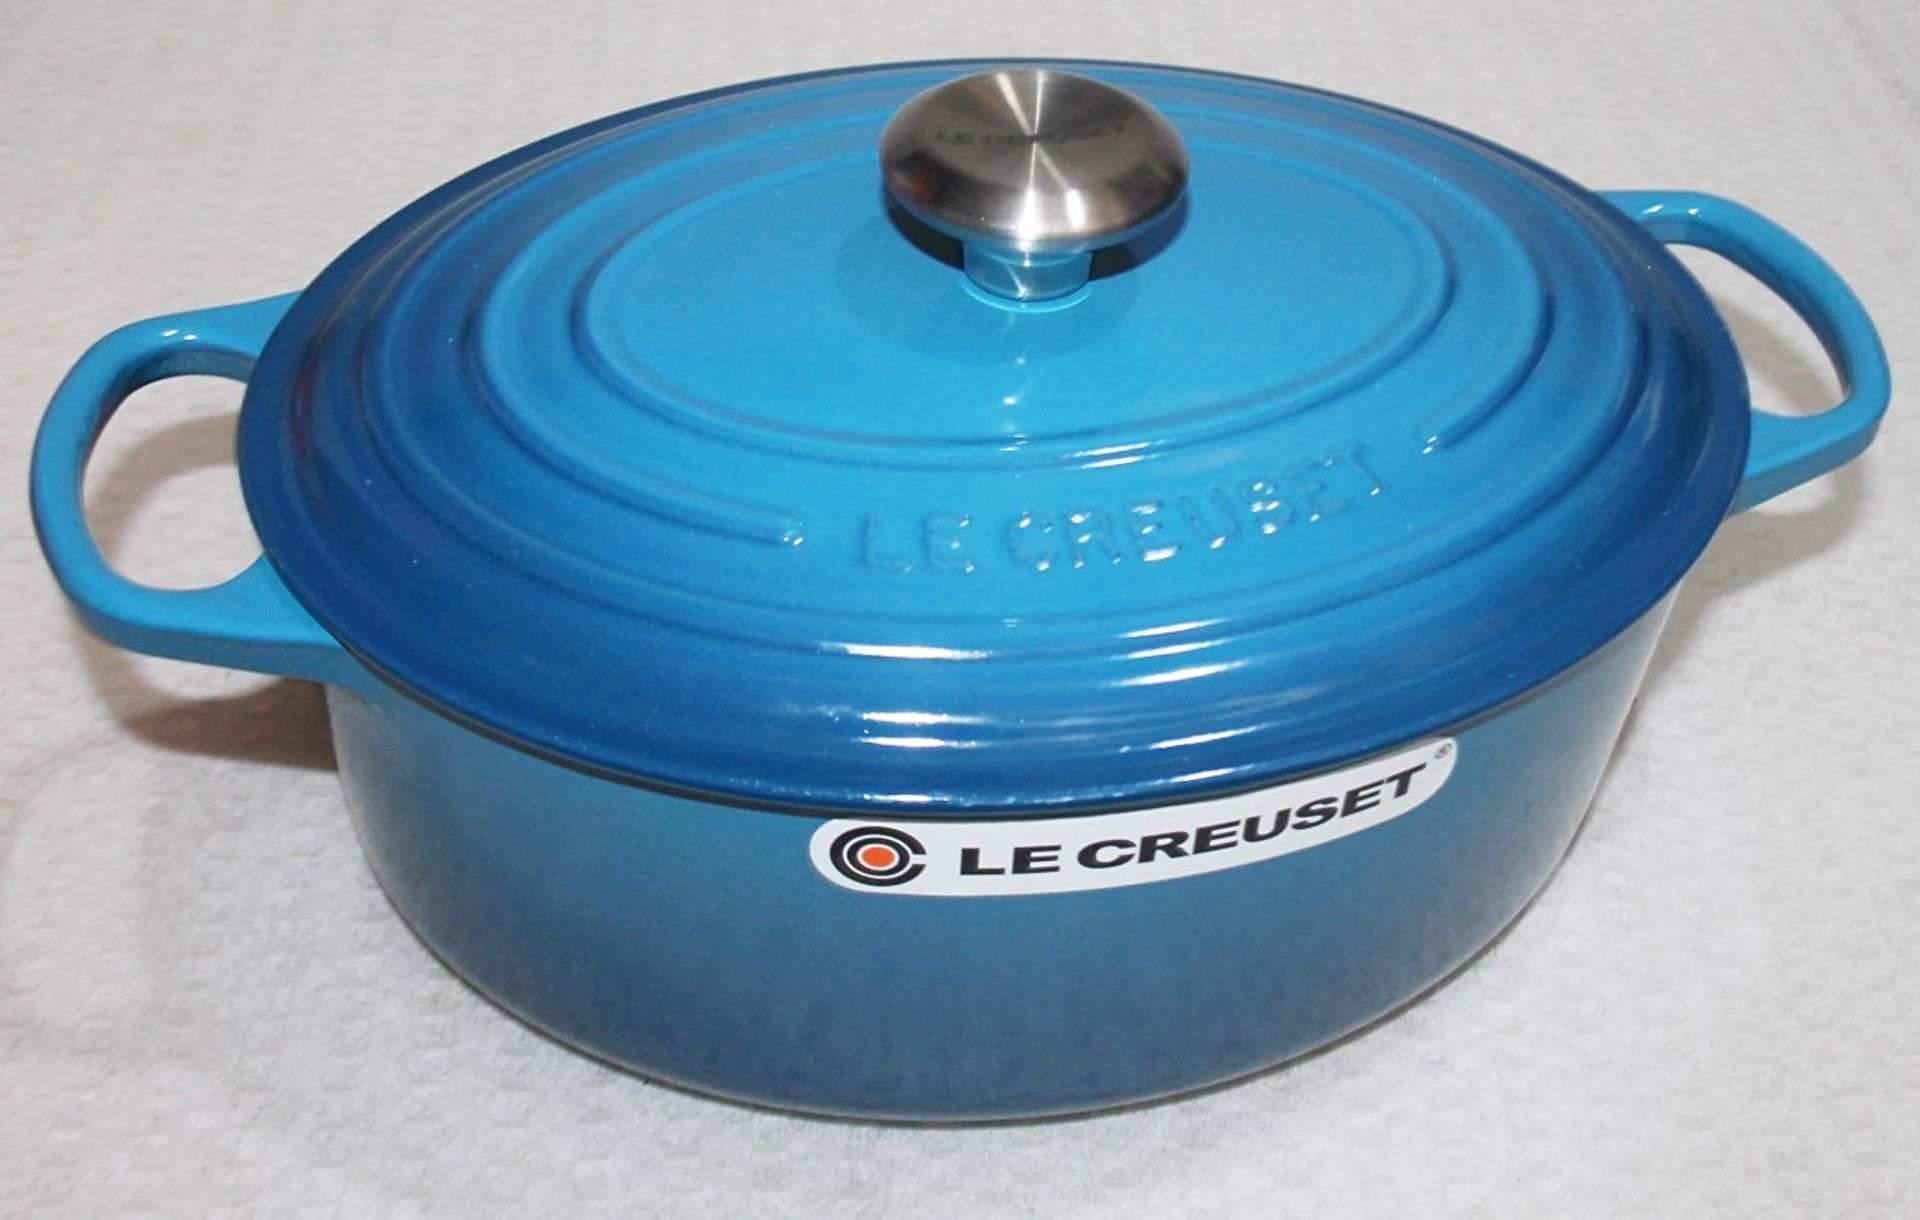 1 x LE CREUSET 'Signature' Enamelled Cast Iron 29cm Oval Casserole Dish In Blue - RRP £295.00 - Image 3 of 9